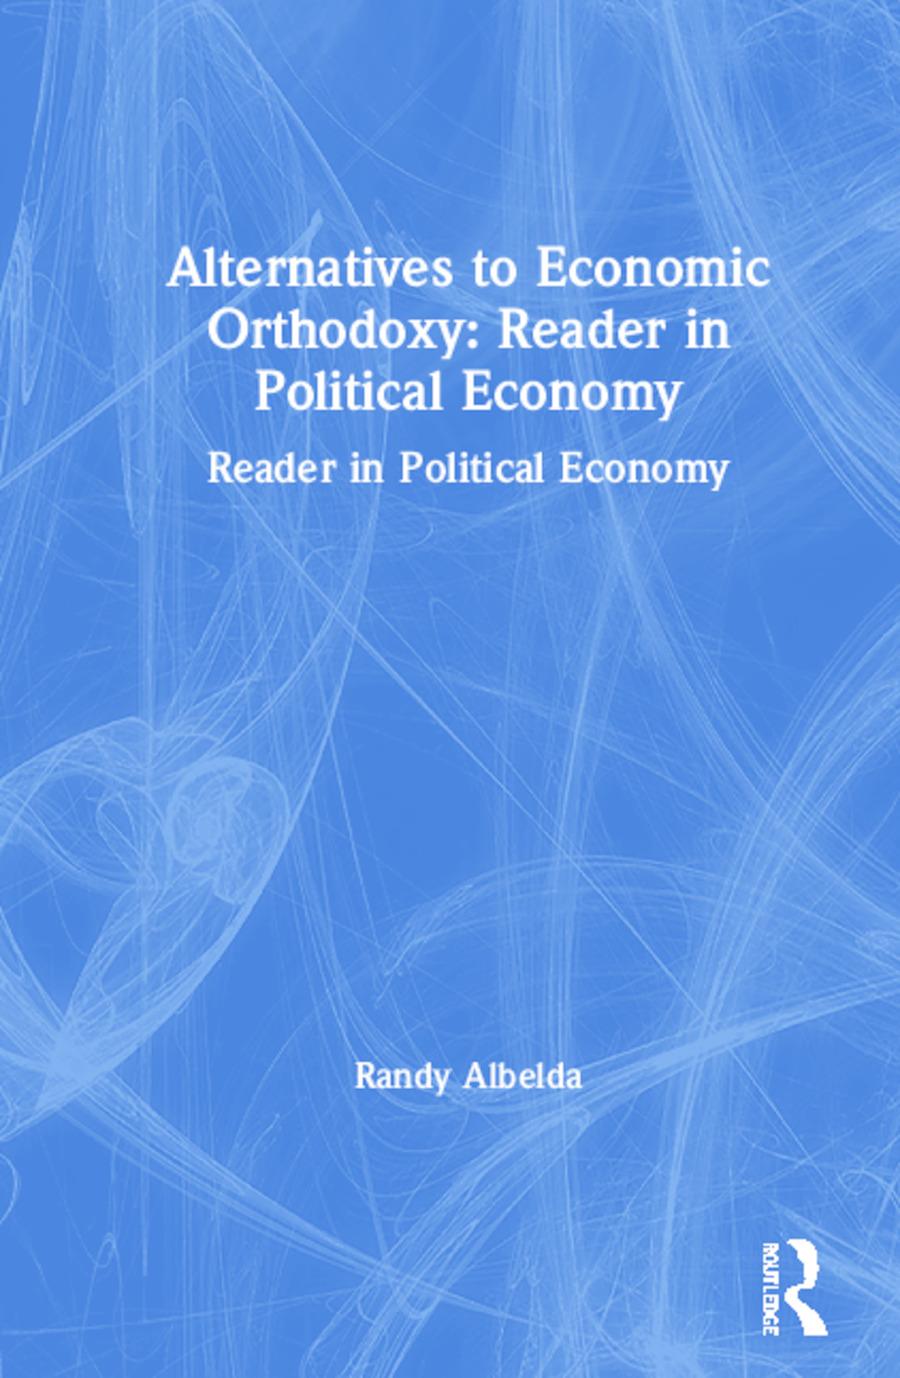 Book Alternatives to Economic Orthodoxy: Reader in Political Economy Randy Albelda